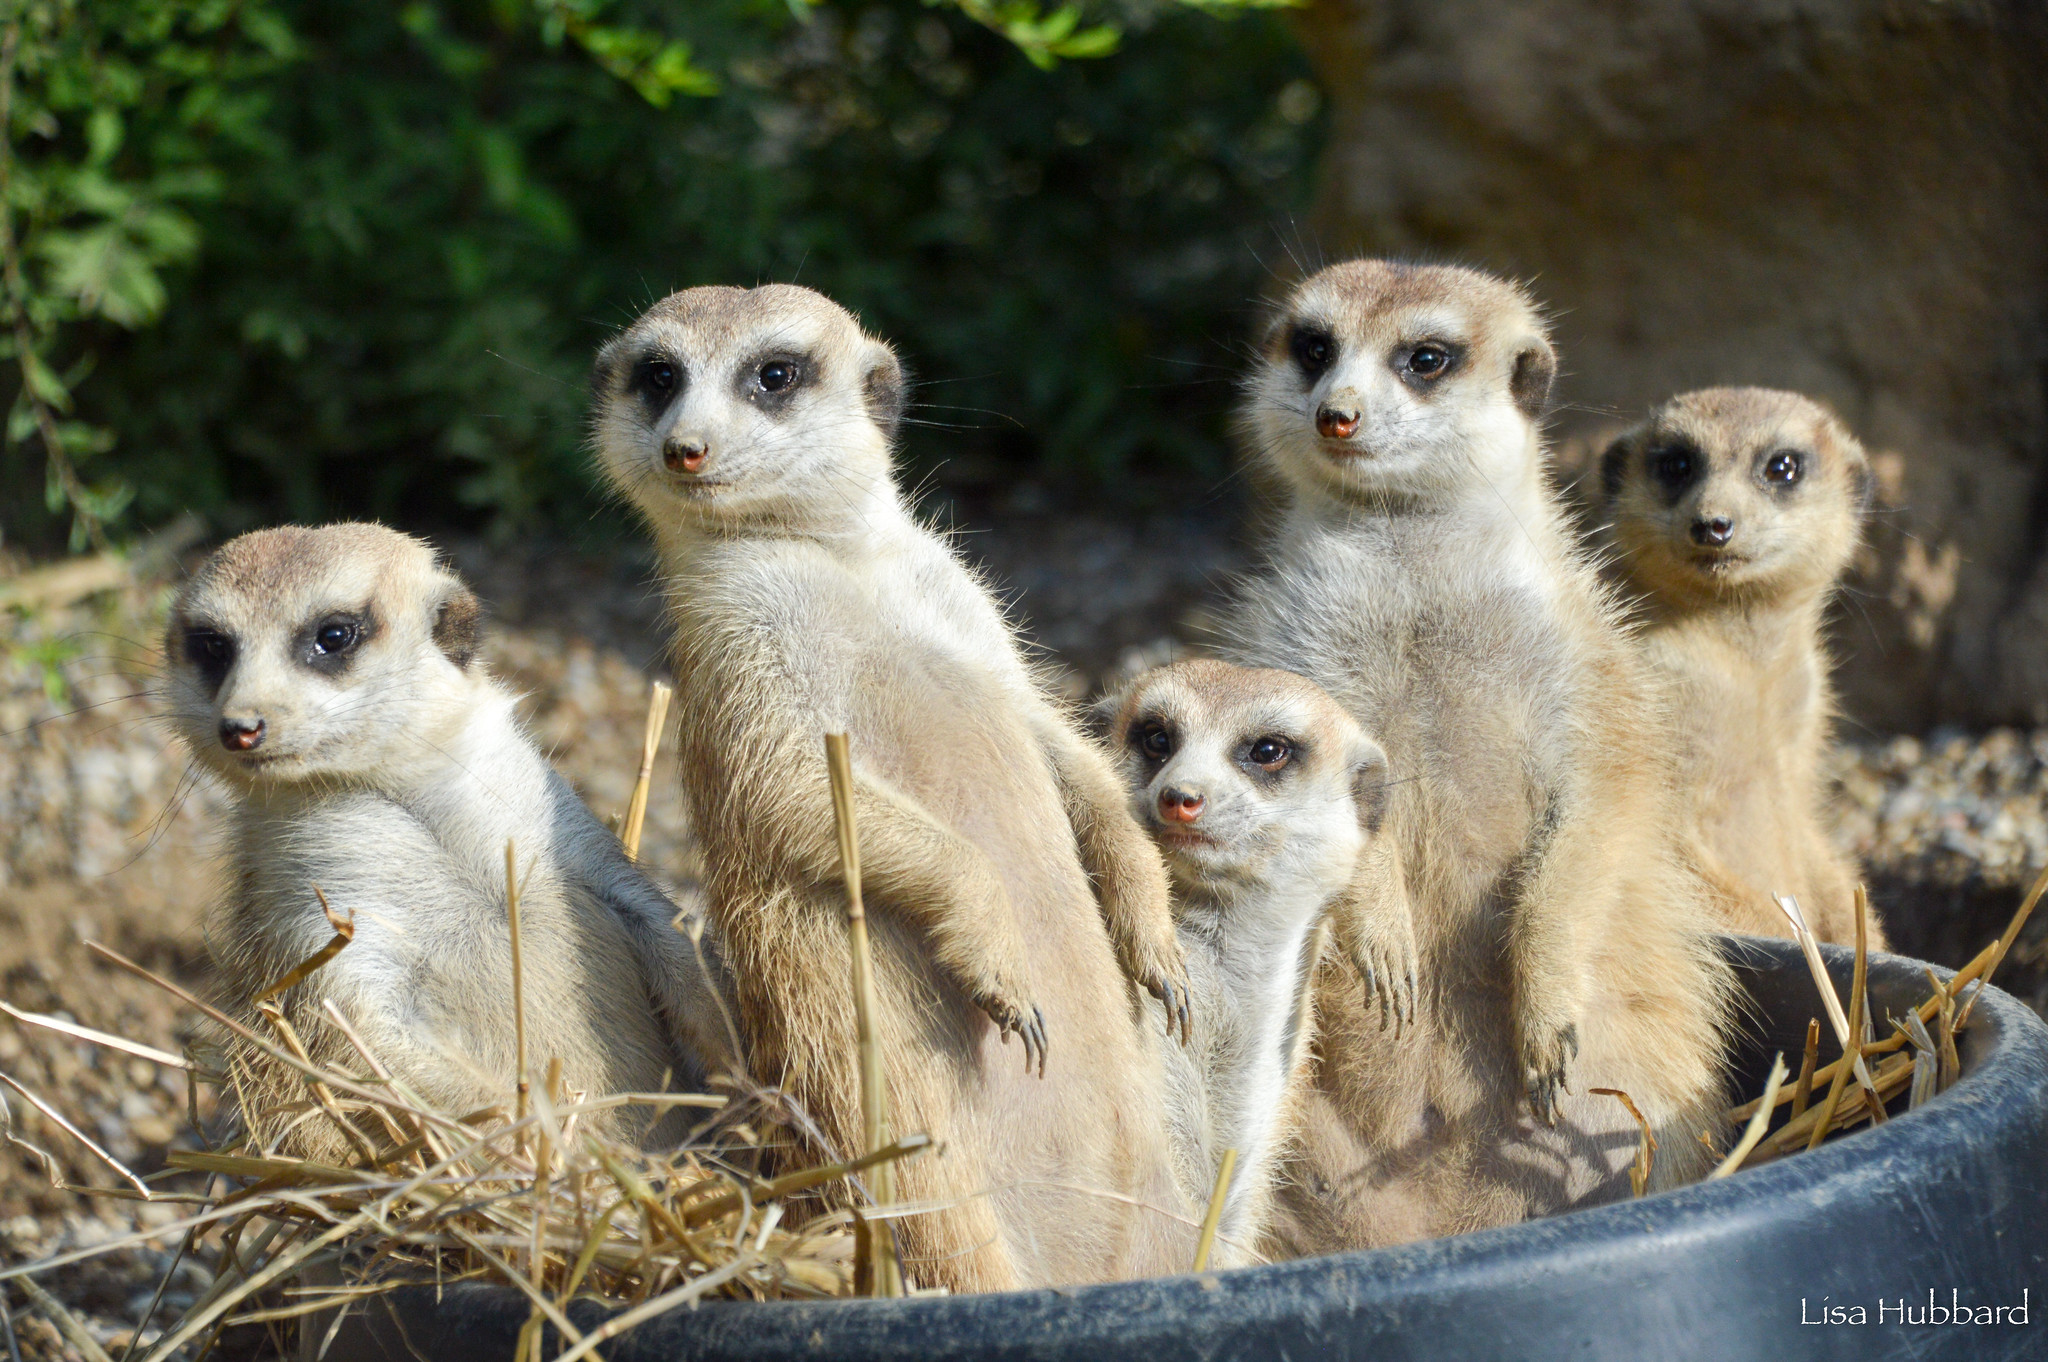 meerkat mob sitting in straw